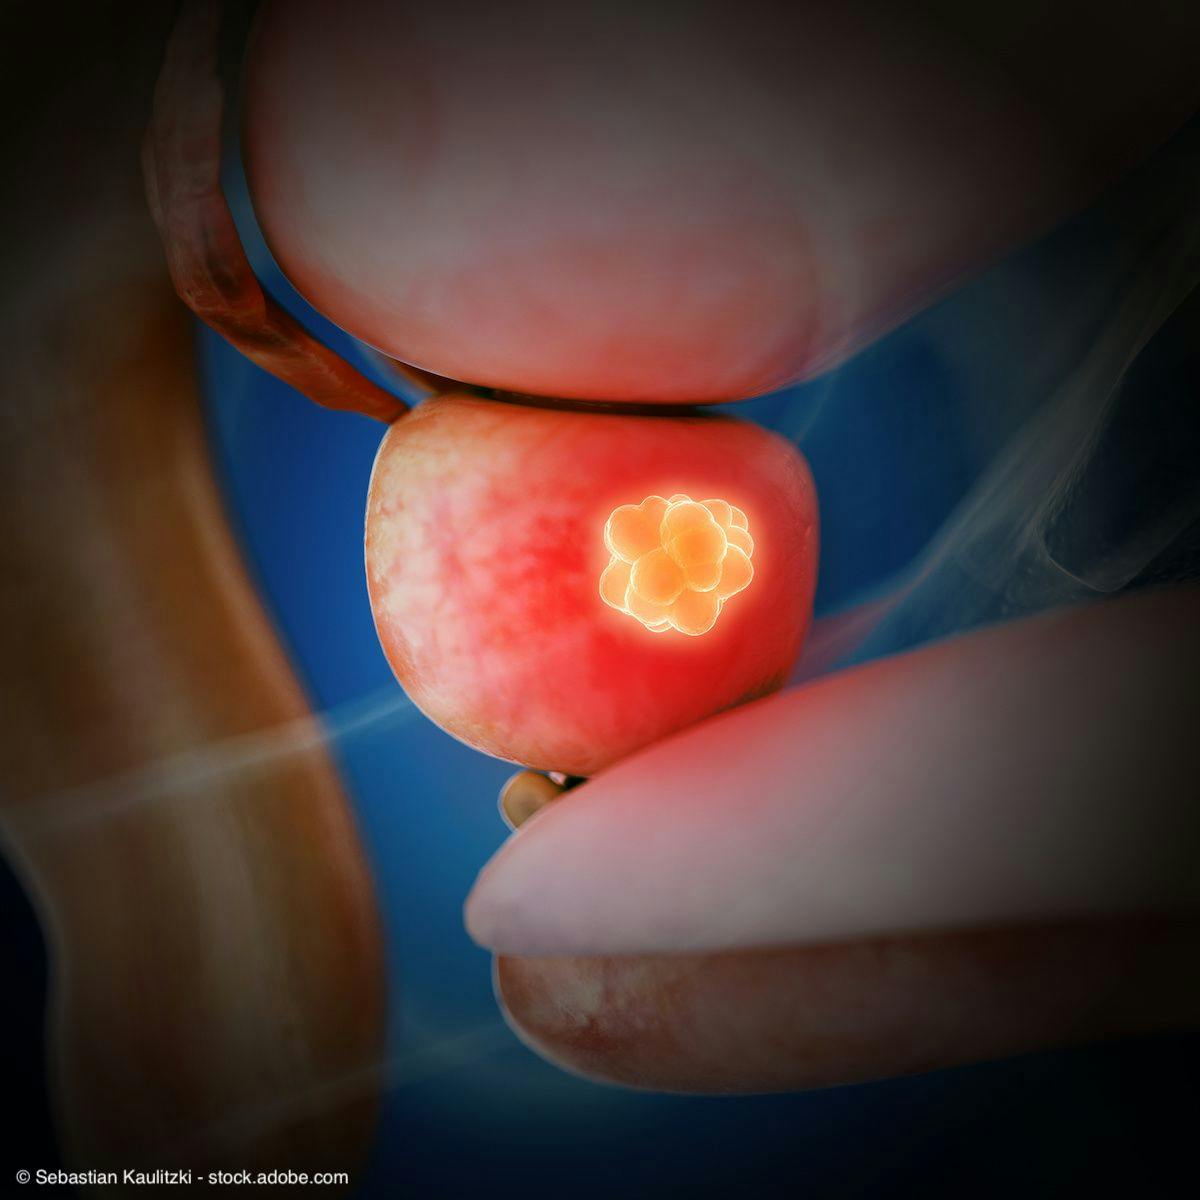 3d rendered illustration of prostate cancer | Image Credit: © Sebastian Kaulitzki - stock.adobe.com 